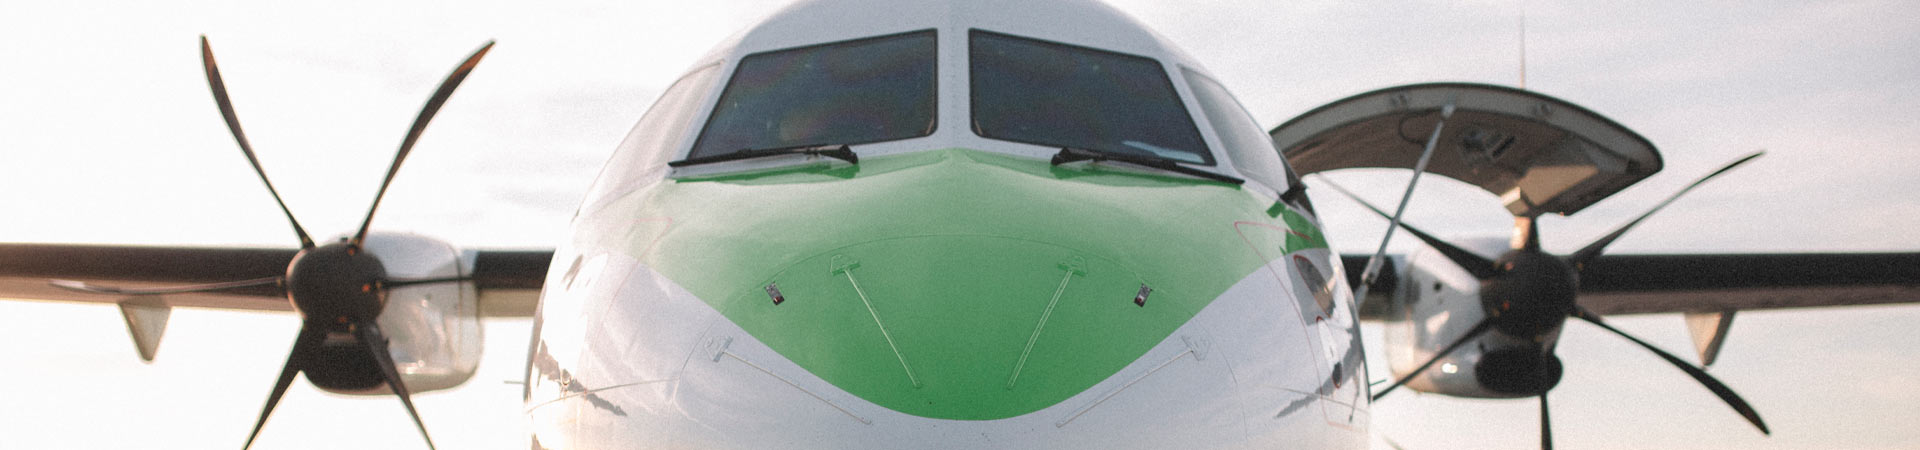 Naso di un aereo ATR Binter